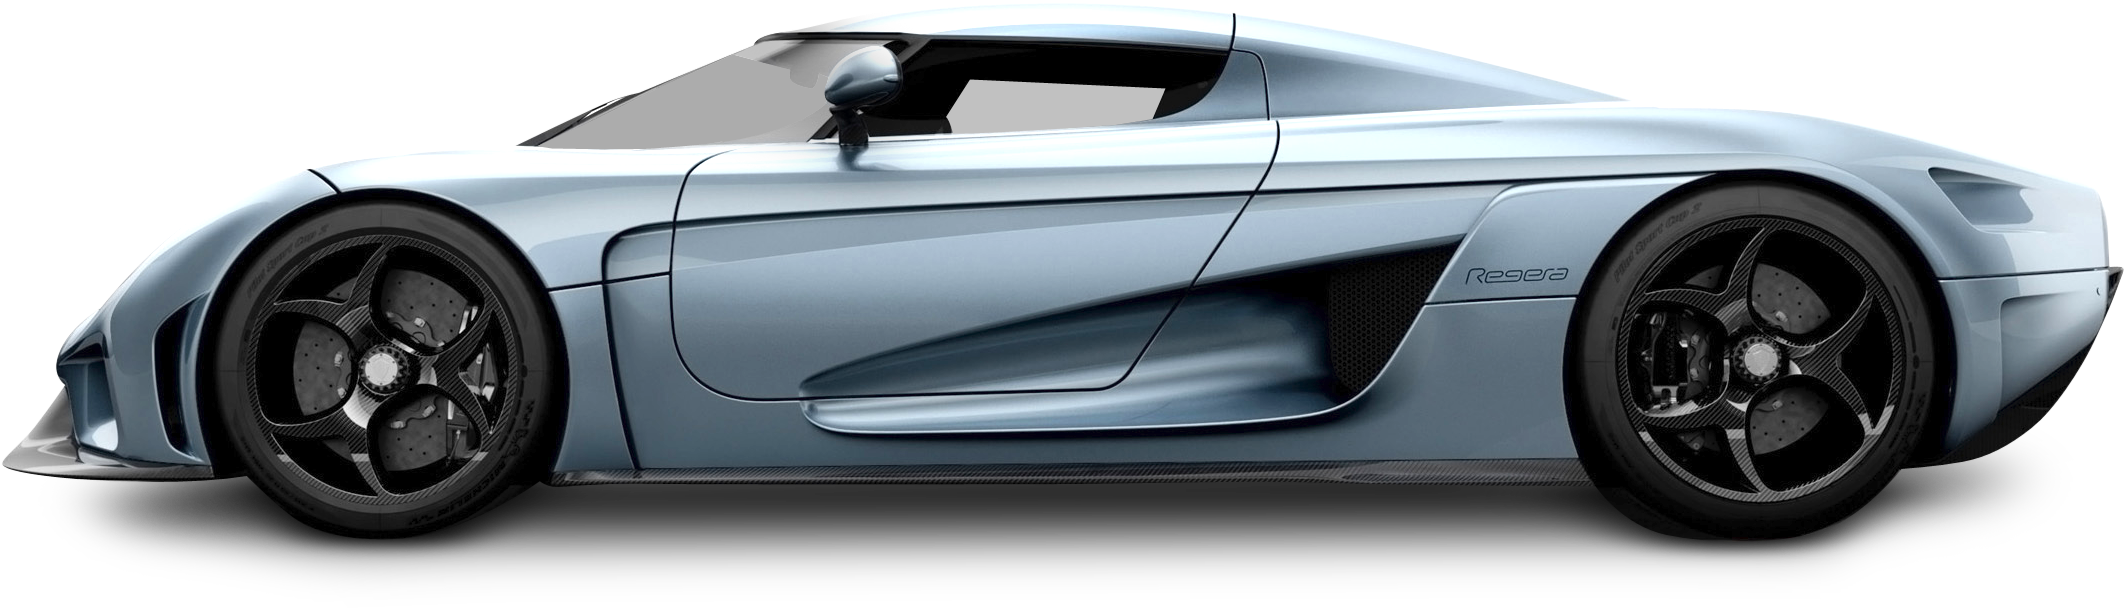 Download PNG image - Koenigsegg Car PNG Image 